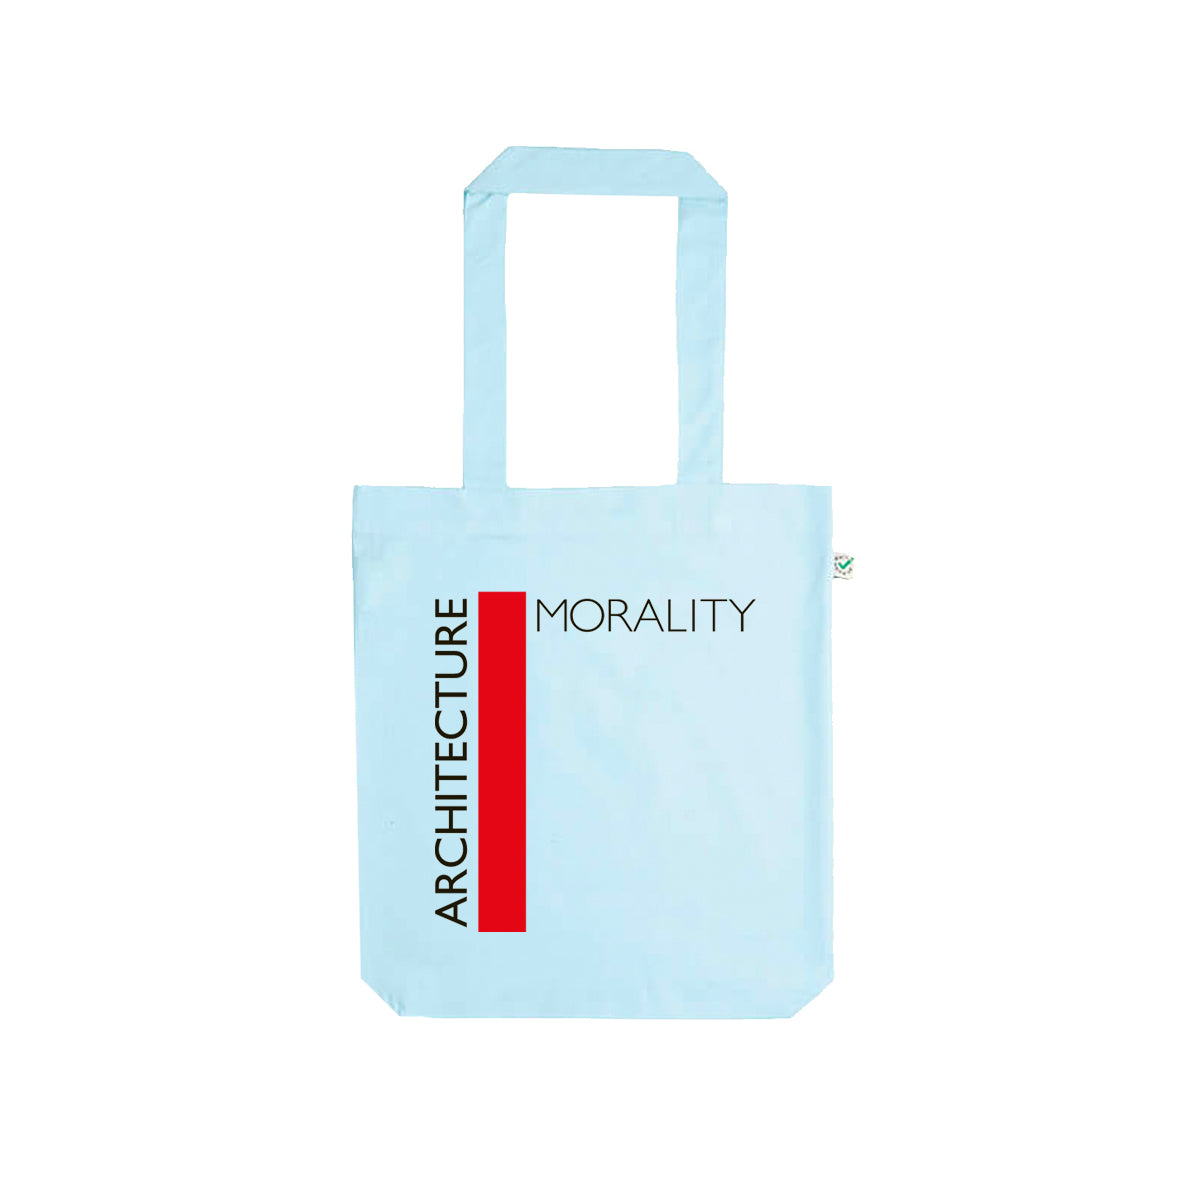 Architecture & Morality - Tote Bag